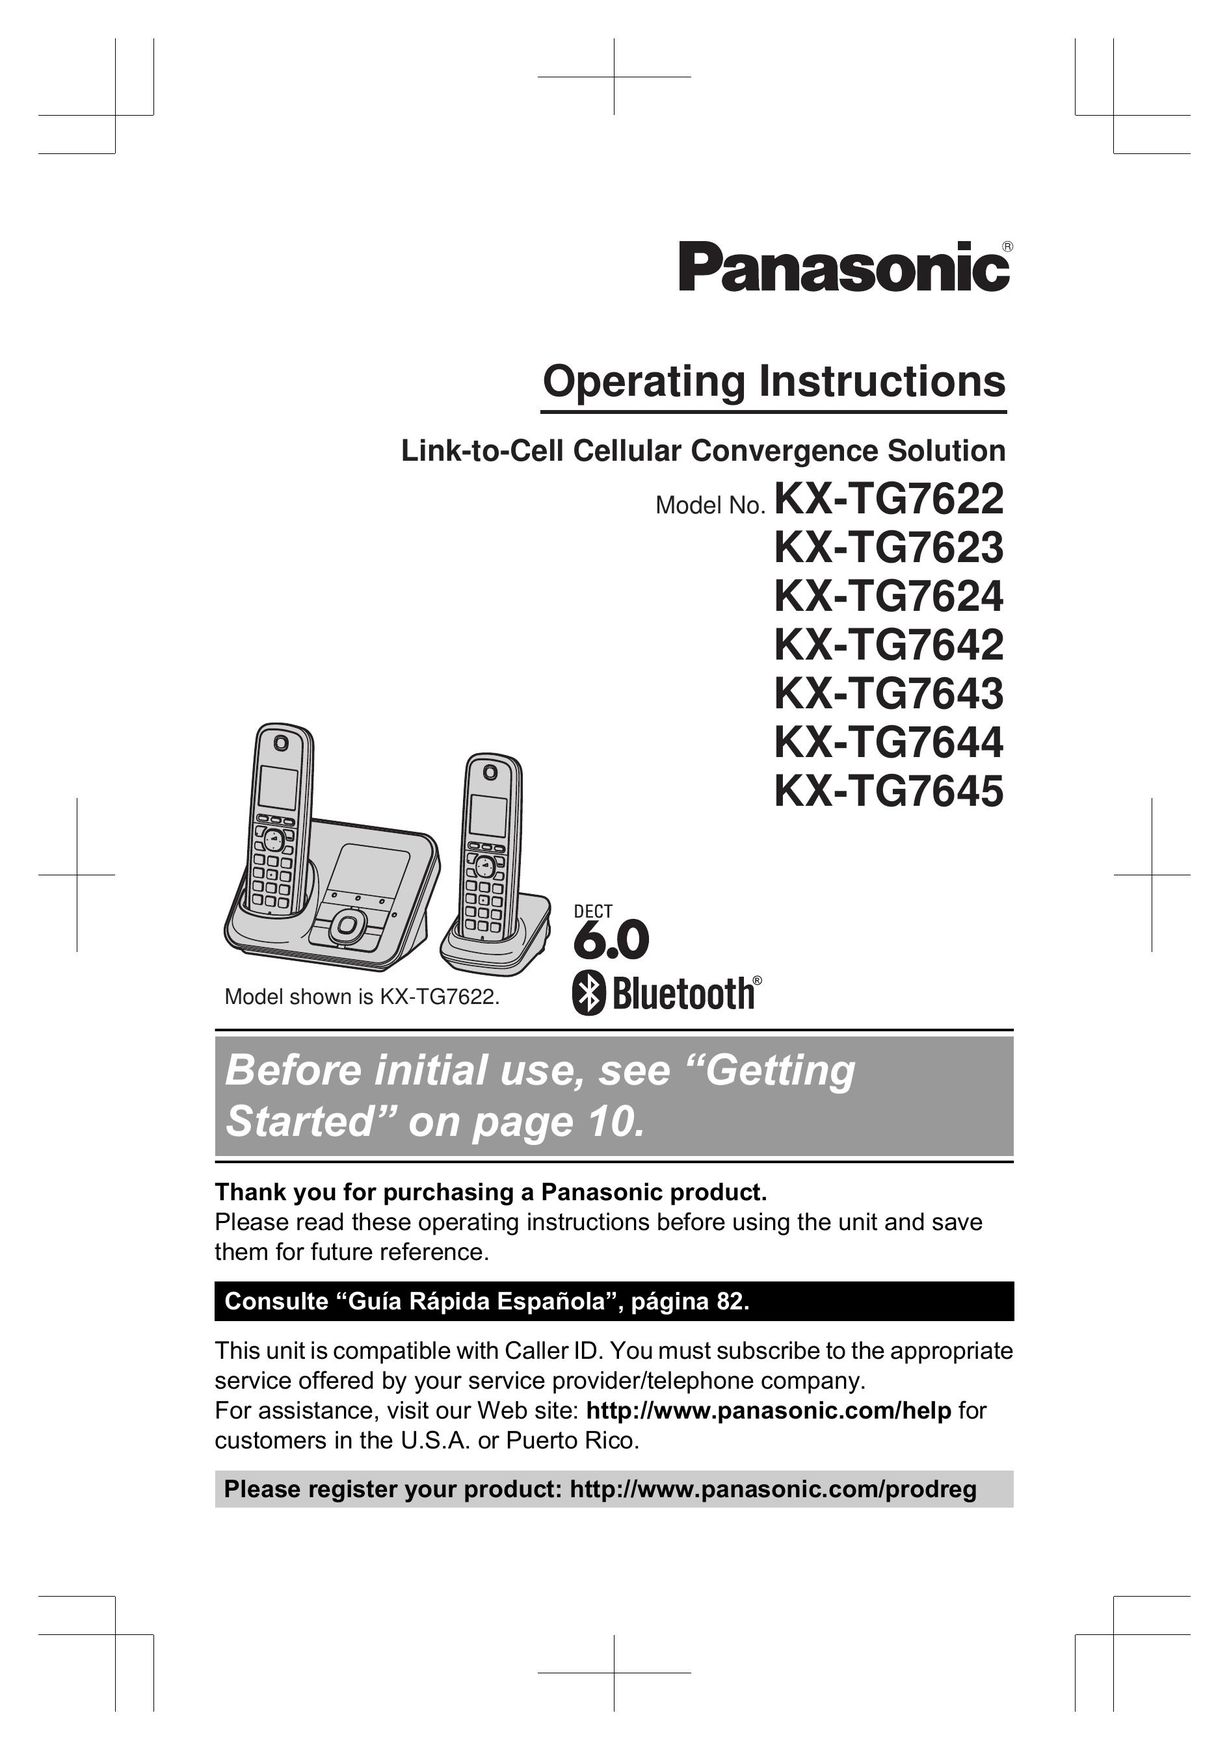 Panasonic KX-TG7645 Bluetooth Headset User Manual